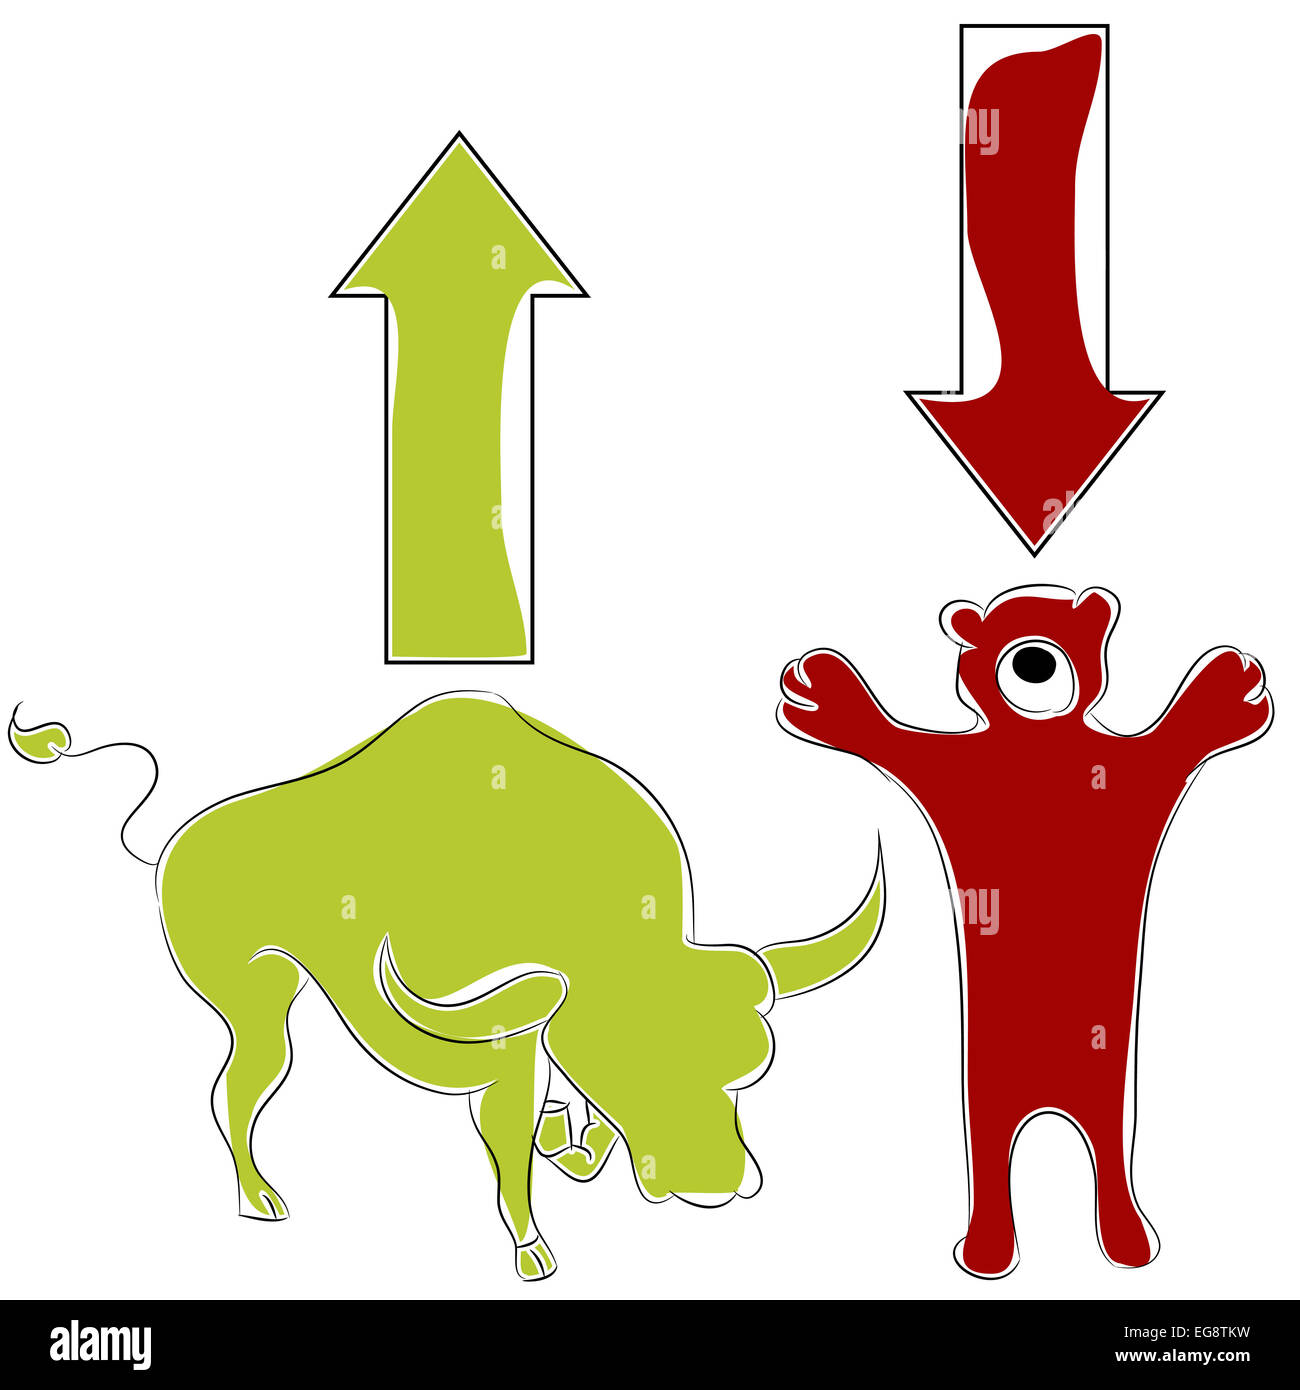 An image of bull bear stock market animal symbols. Stock Photo